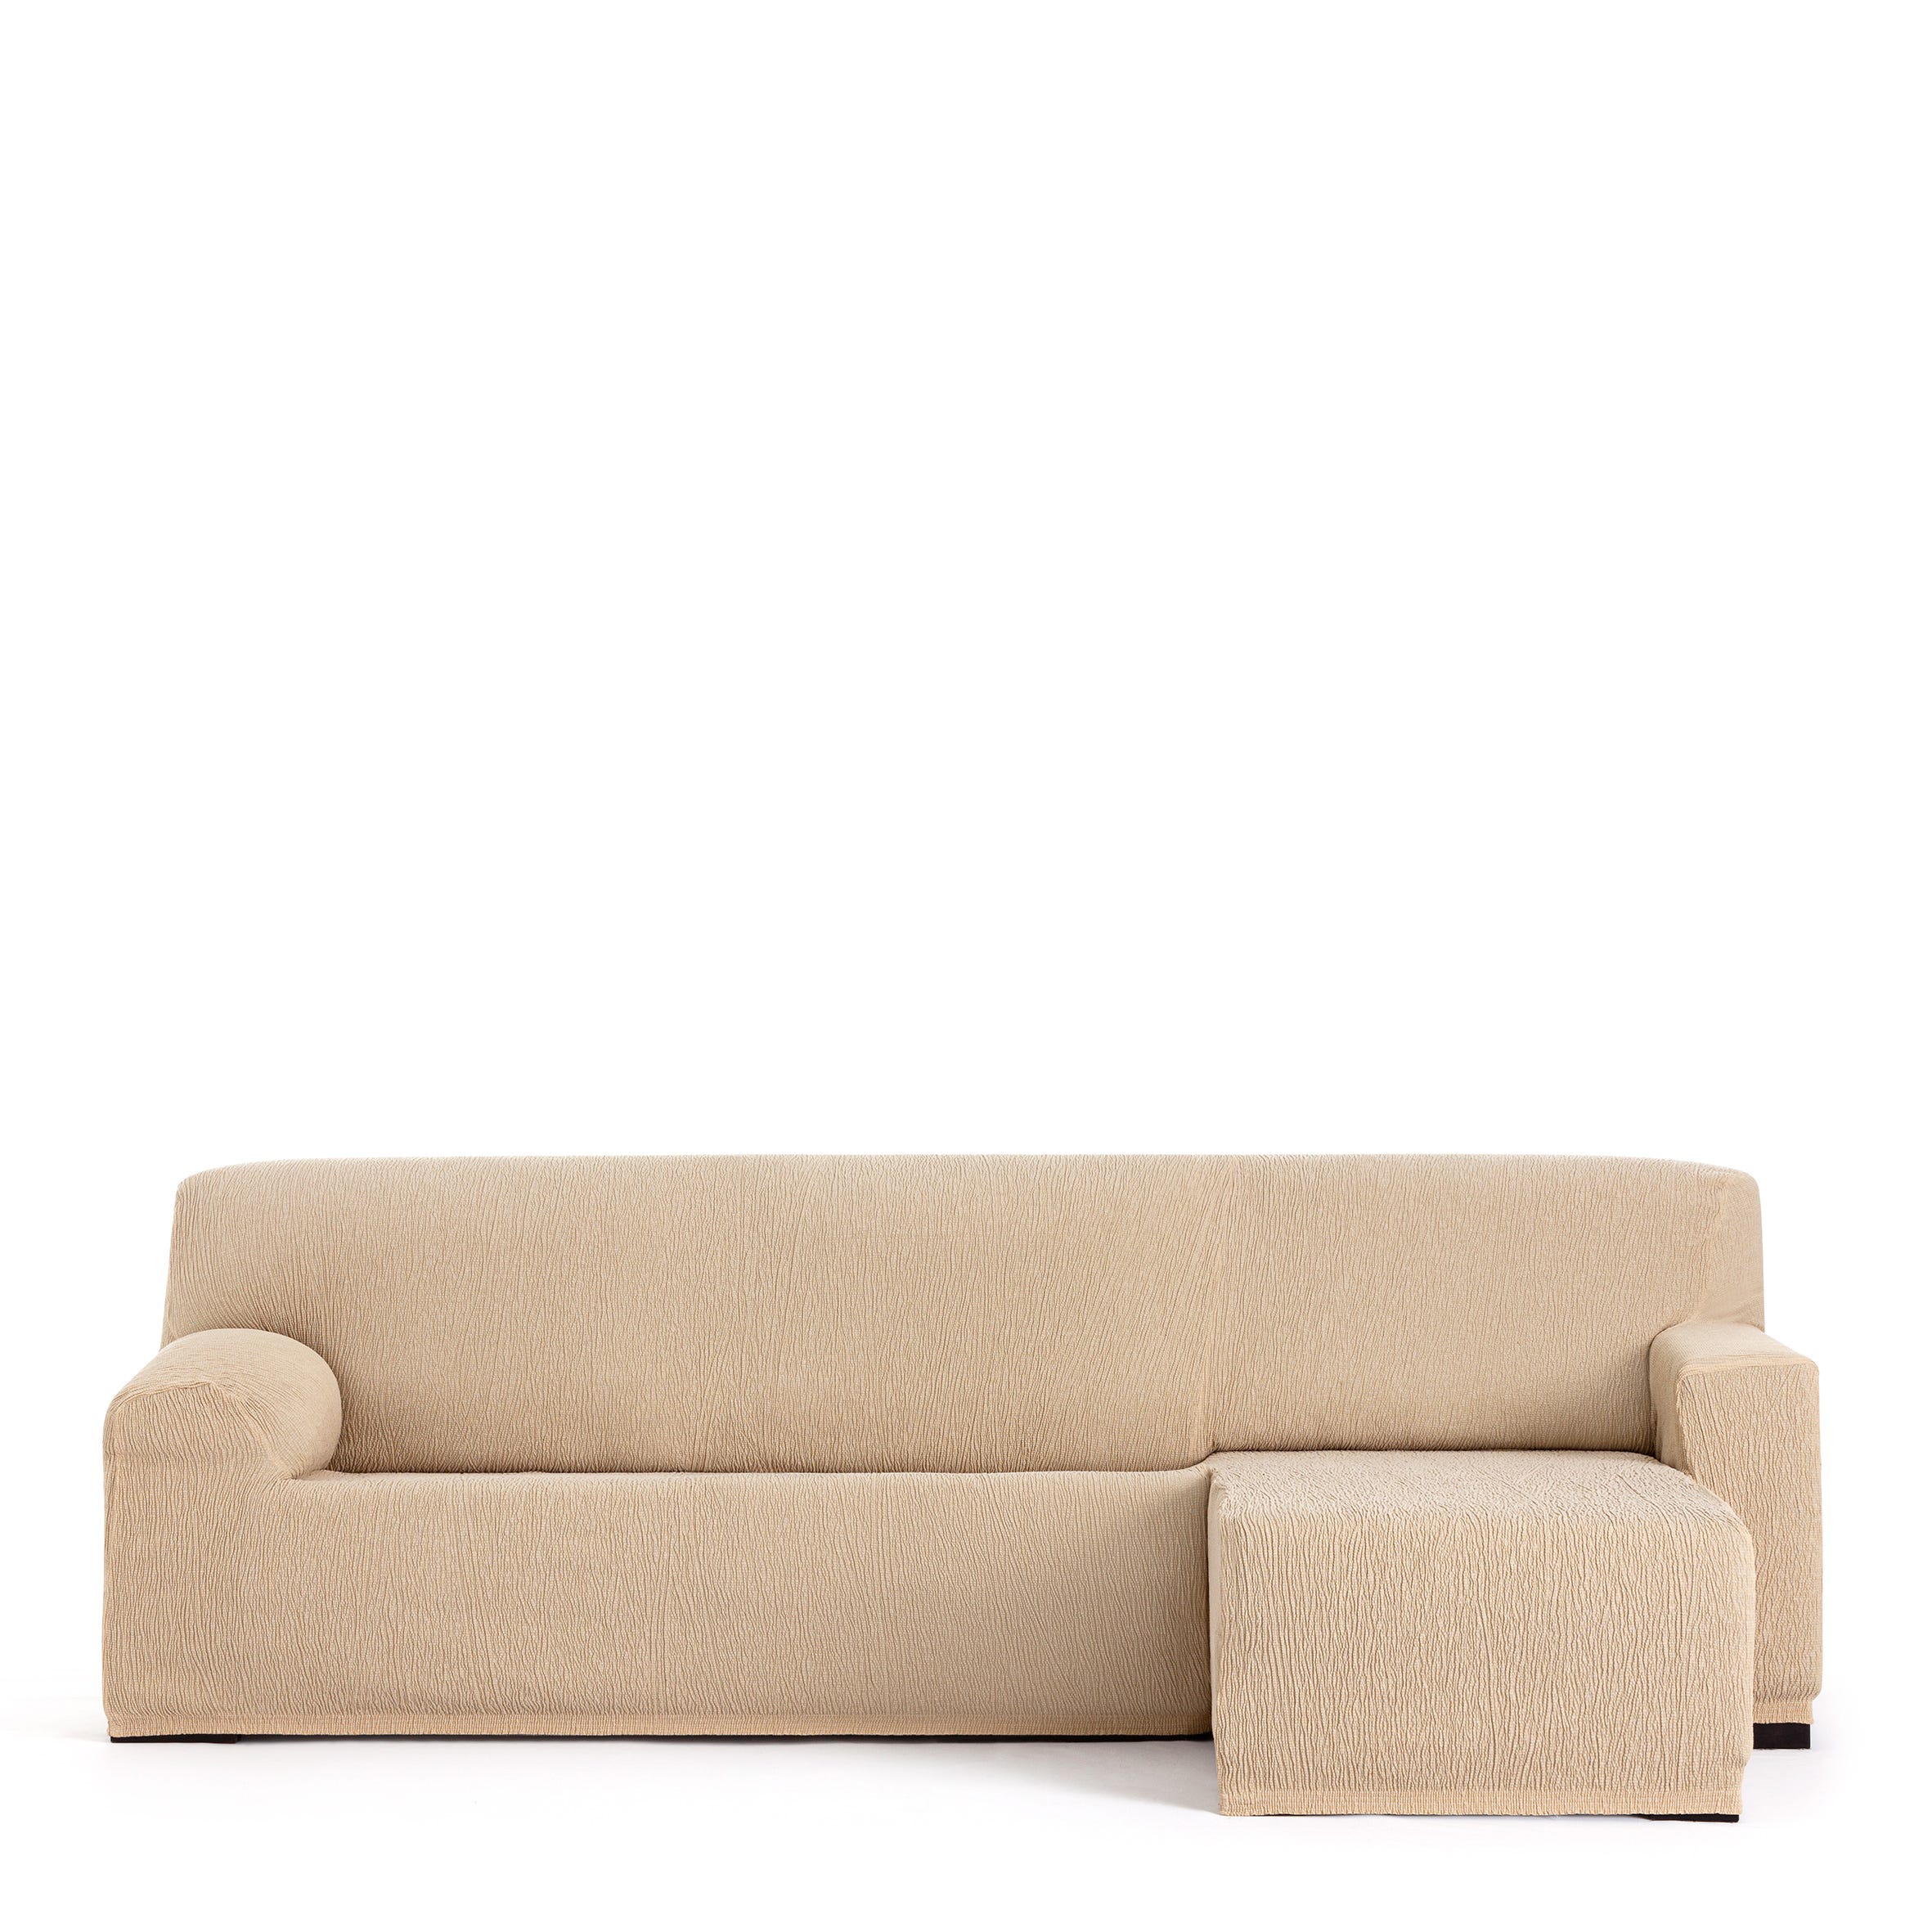 Funda de sofá Troya chaise longue elástica derecha b/c beige 250